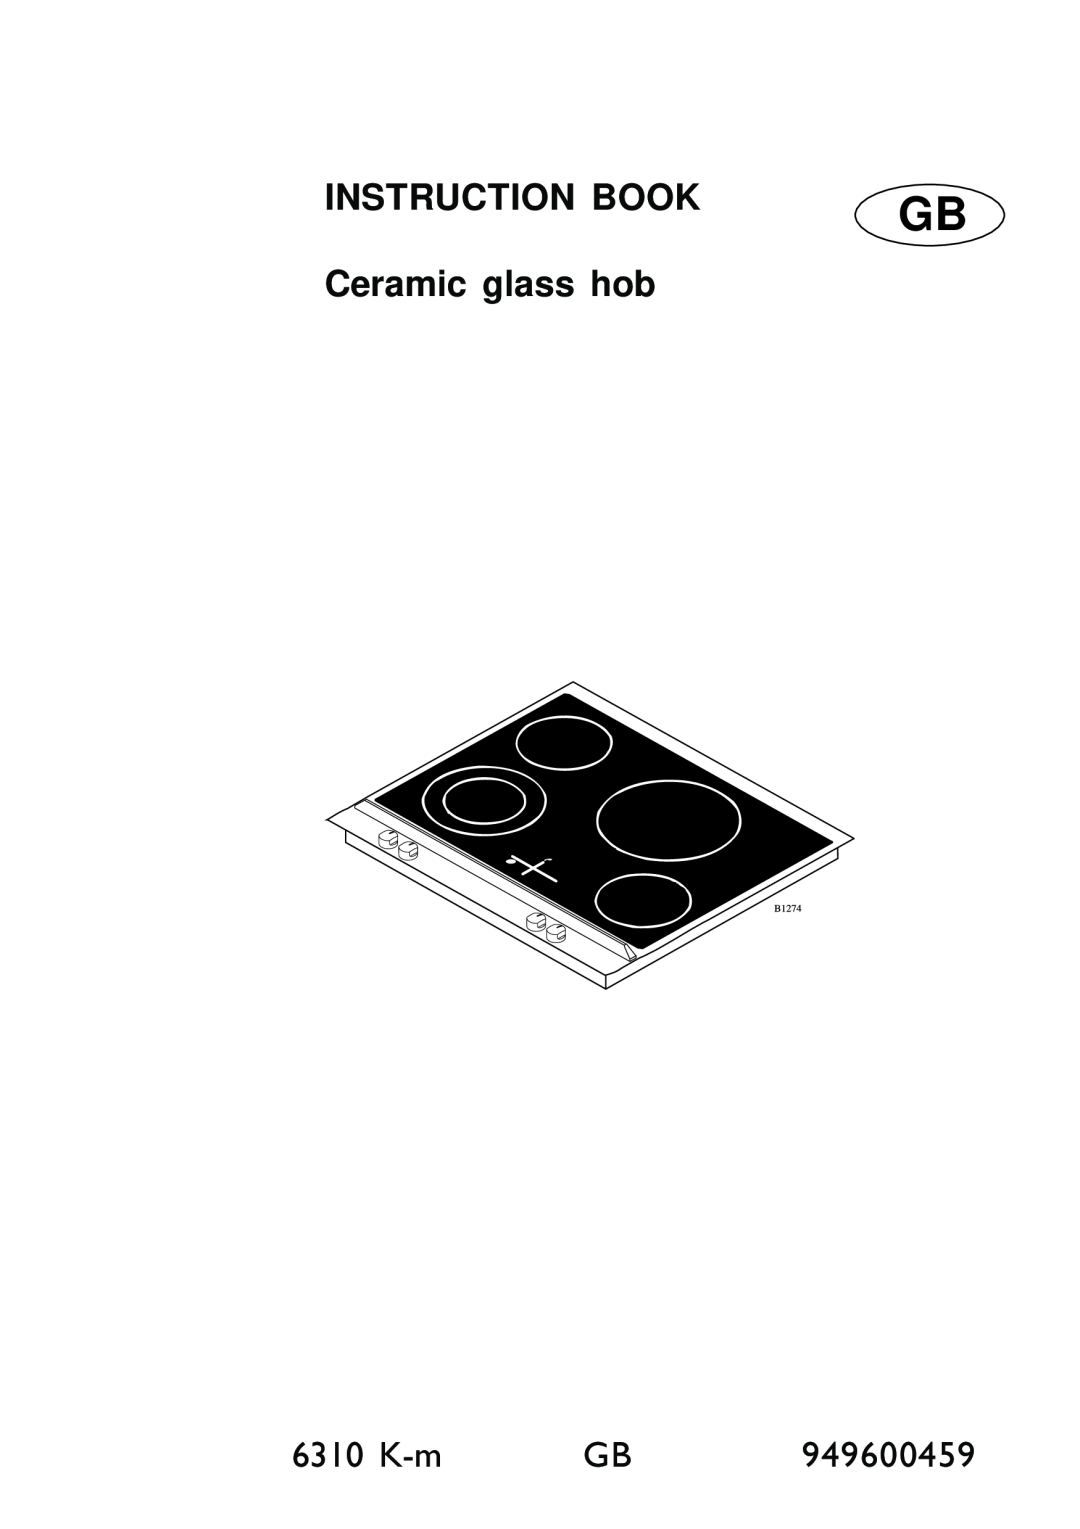 Electrolux manual INSTRUCTION BOOK Ceramic glass hob, 6310 K-m, 949600459, 1 GB 